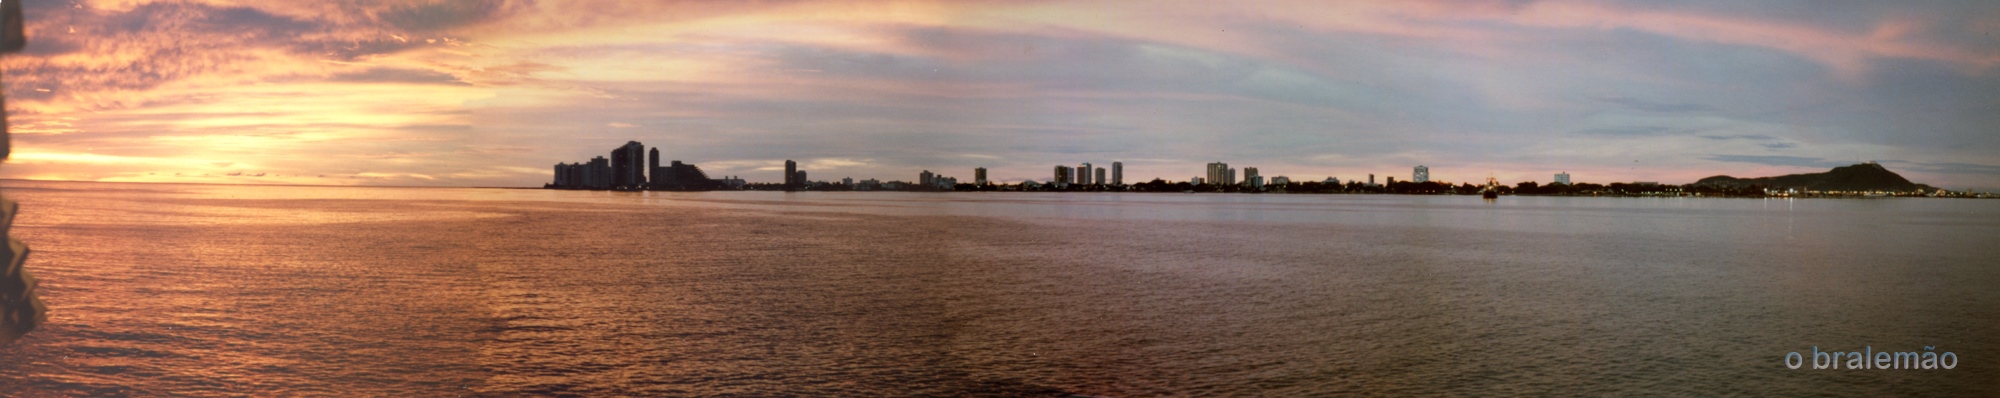 Ankunft in Cartagena, Kolumbien bei Sonnenaufgang (1979)